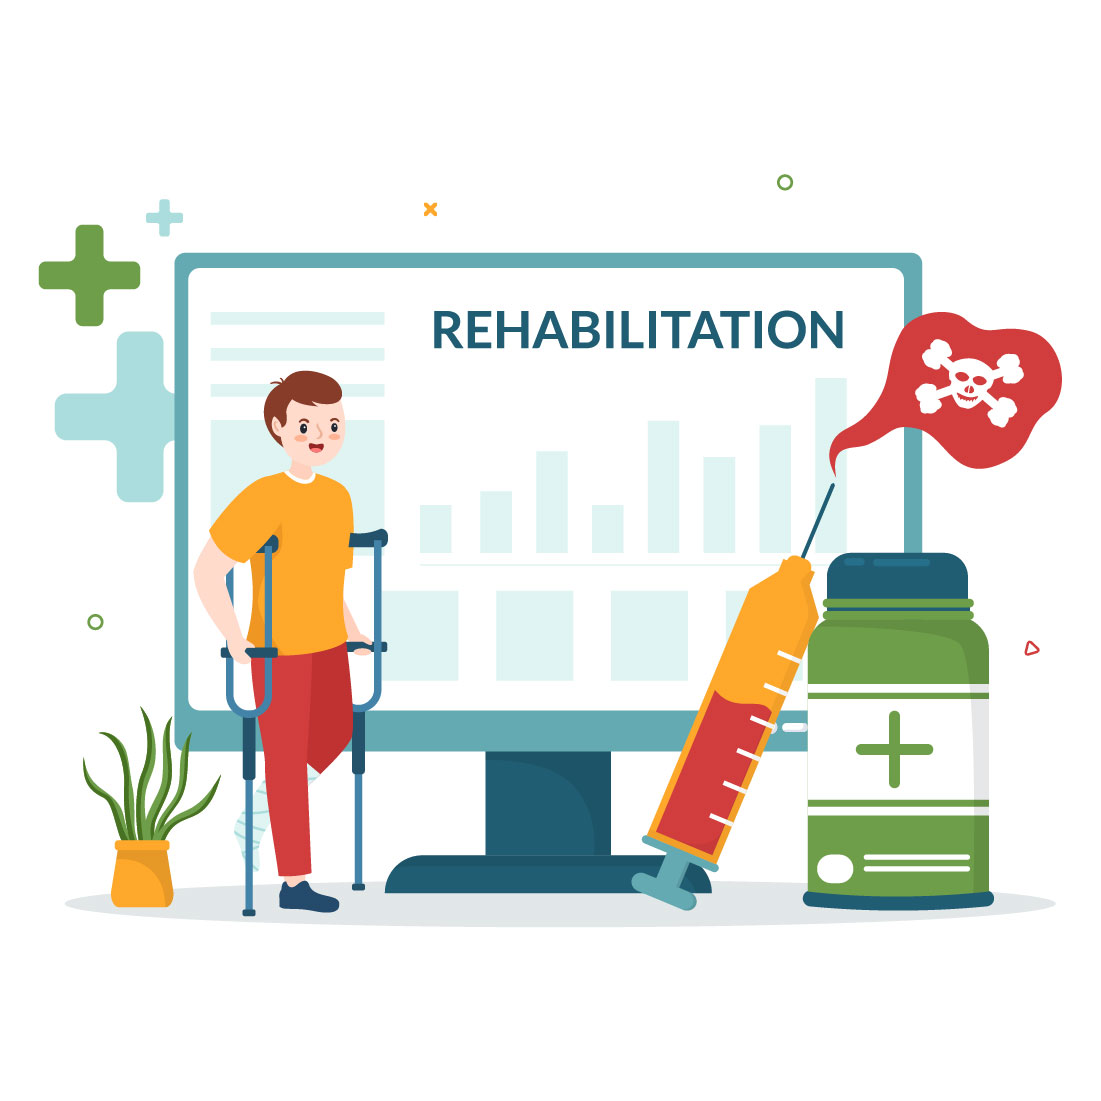 Rehabilitation Cartoon Design Illustration cover image.